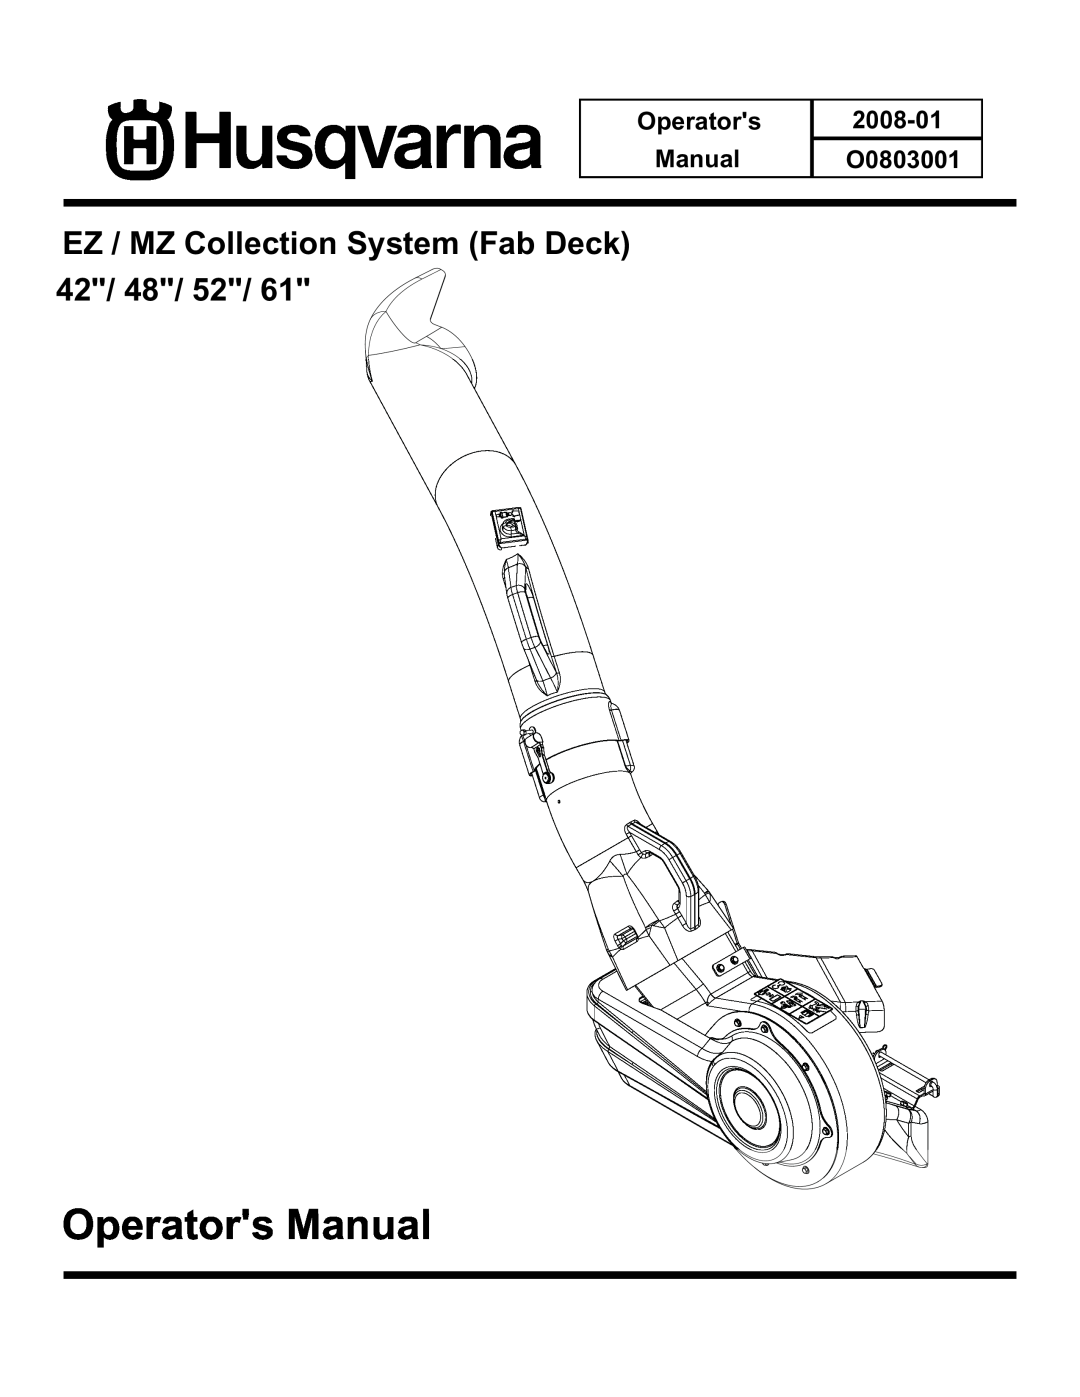 Husqvarna manual EZ / MZ Collection System Fab Deck 42/ 48/ 52, Operators Manual, 2008-01 O0803001 